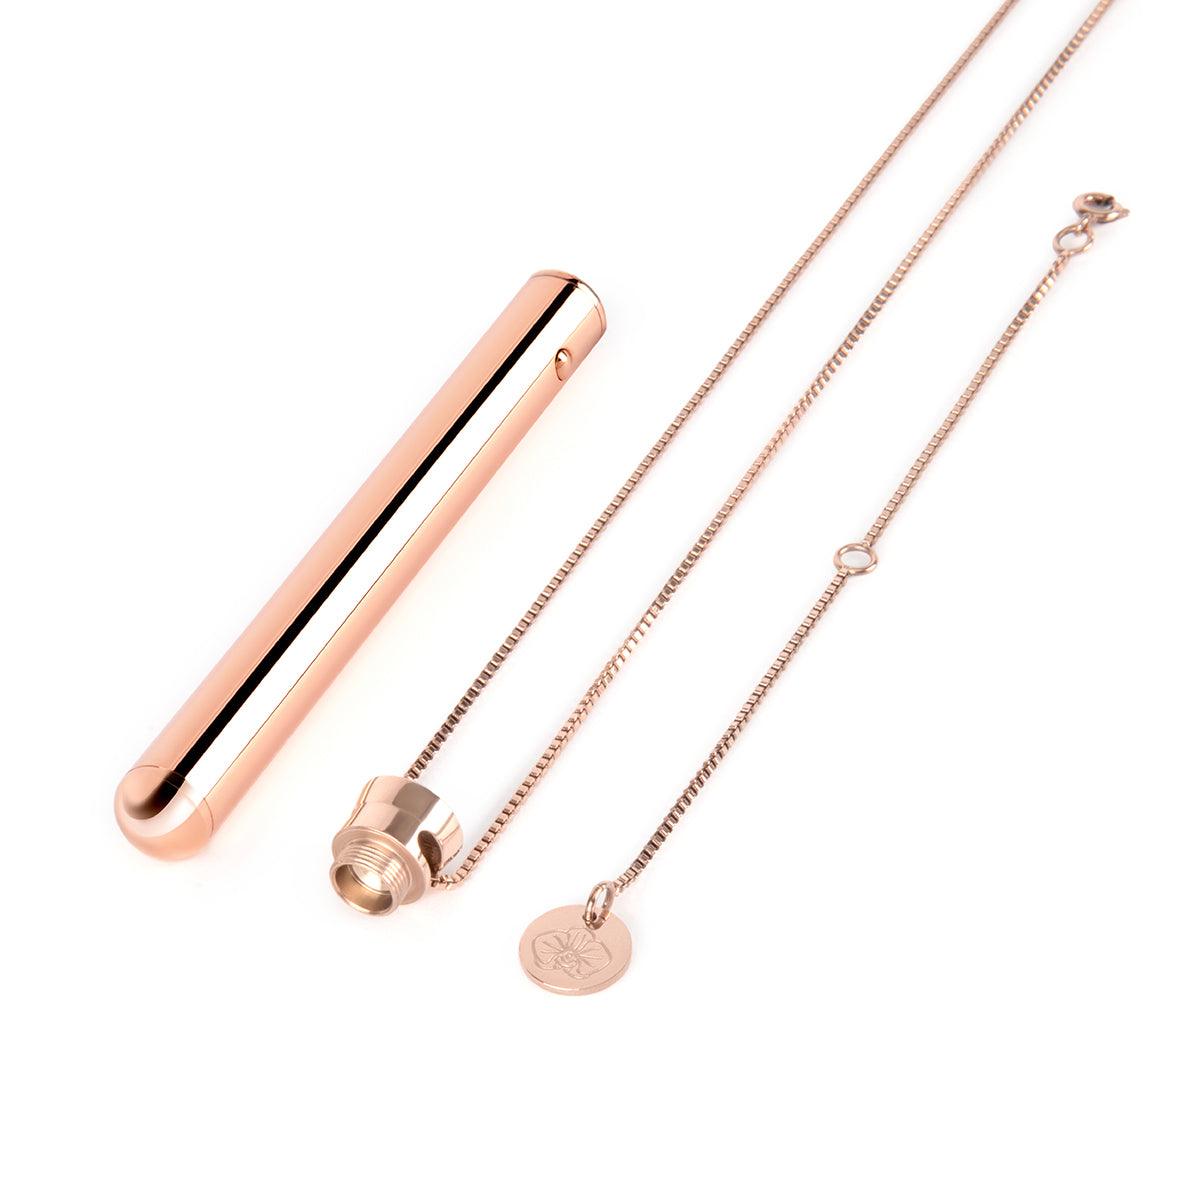 Le Wand Vibrating Necklace - Rose Gold - shop enby